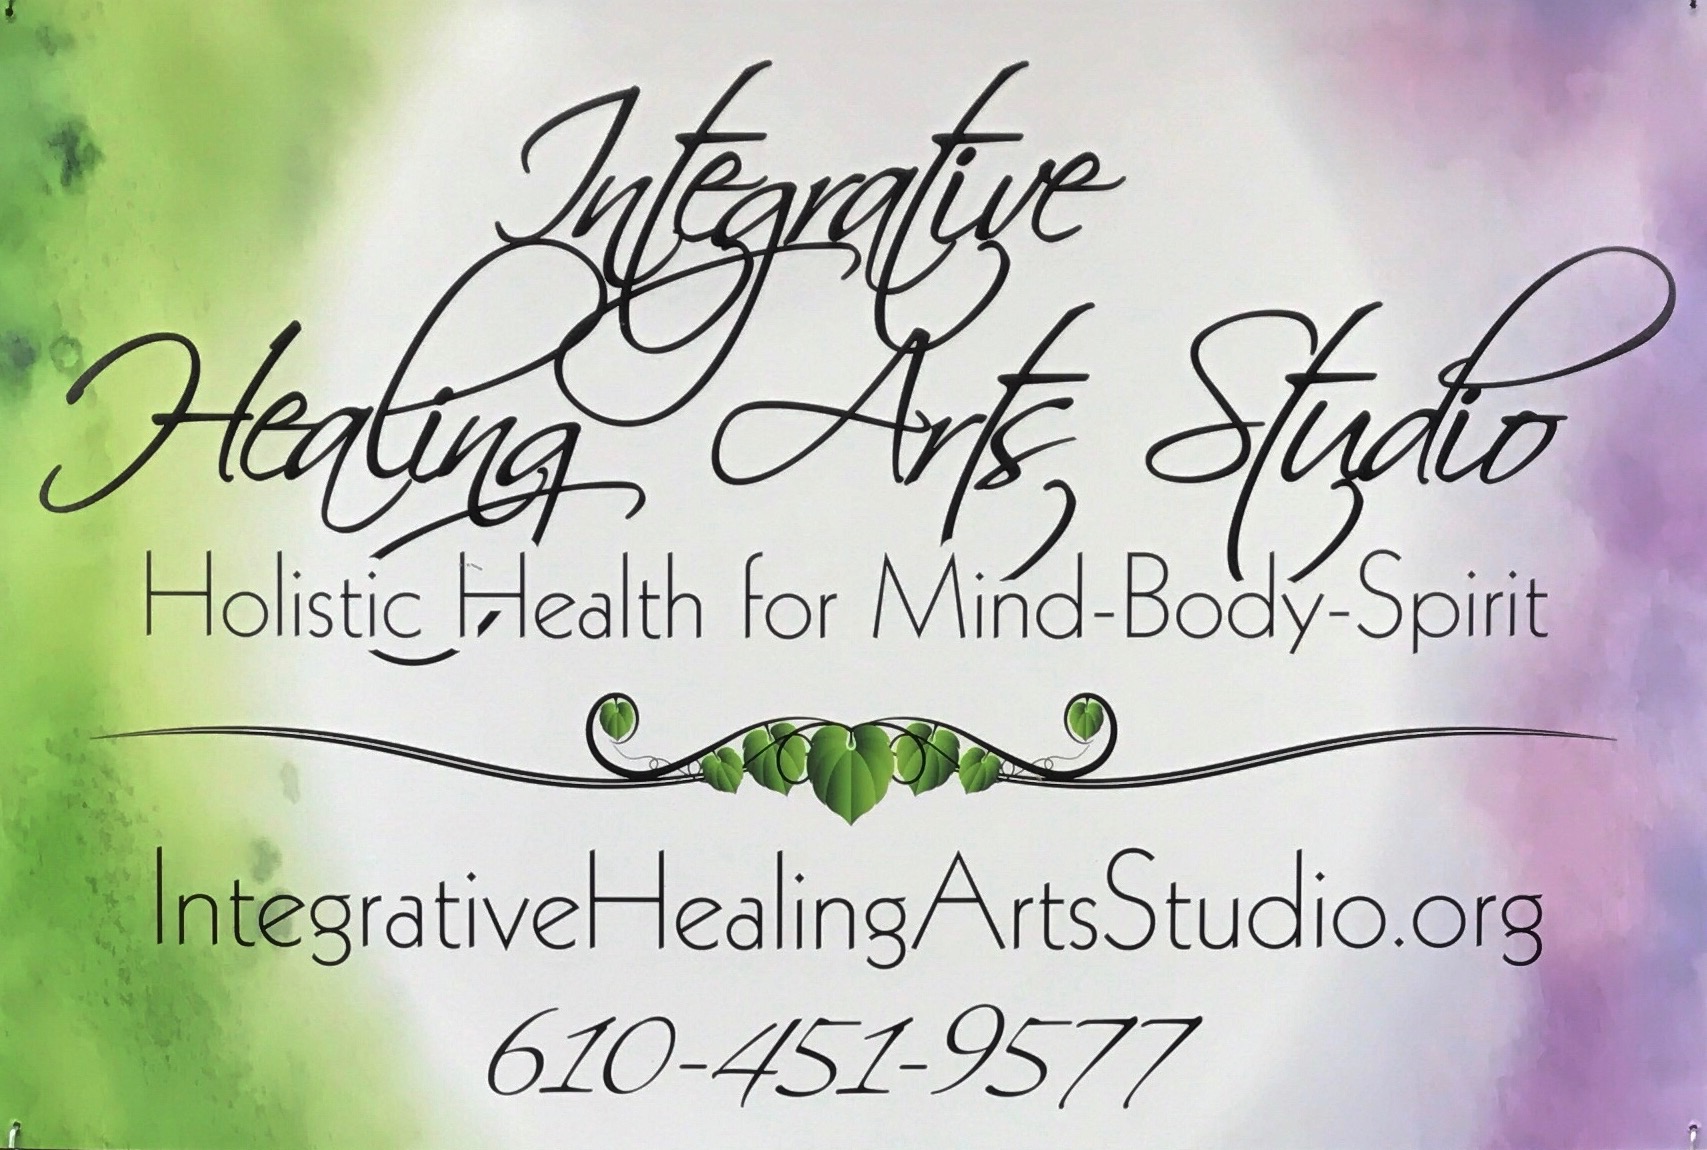 Integrative Healing Arts Studio West Reading, Certified Holistic Health Practitioner, Holistic Health, Massage, Reiki, Herbal Medicine, Aromatherapy, Holistic Nutrition